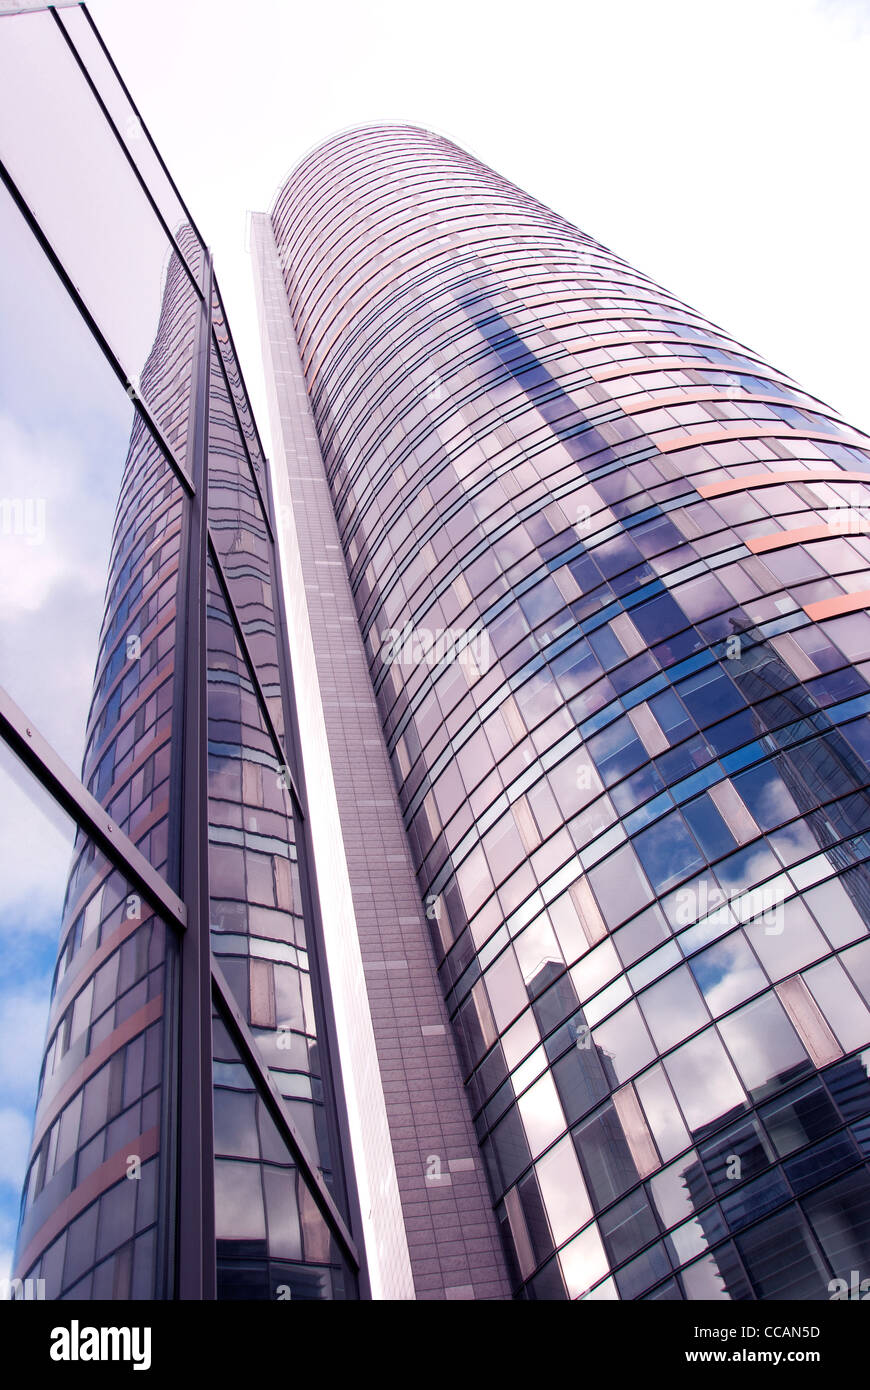 Glass high skyscraper. Modern city architecture background. Stock Photo